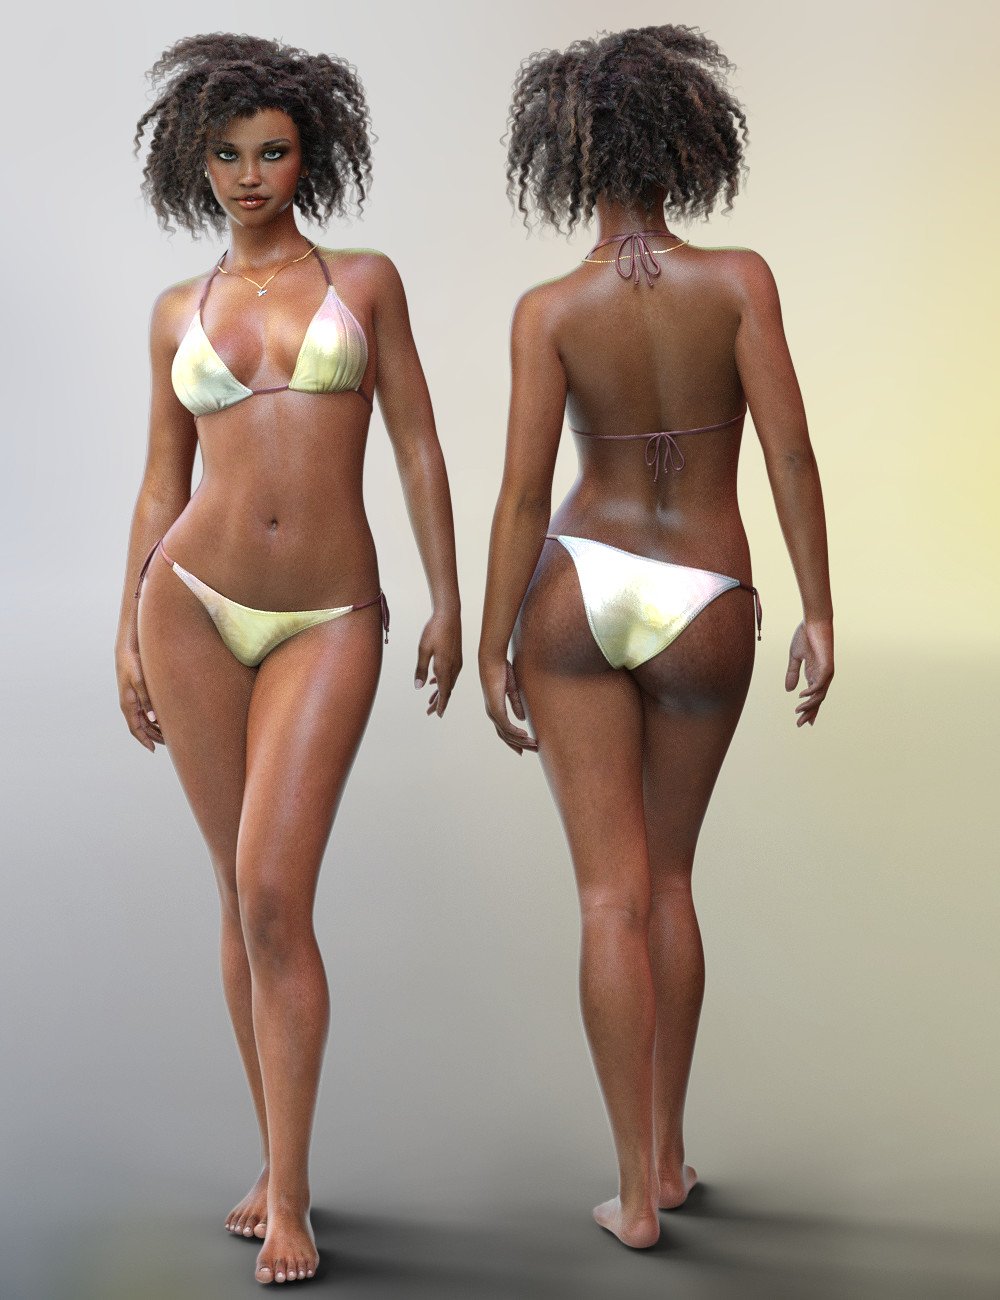 Hahana for Kalea 7 by: Virtual_World, 3D Models by Daz 3D